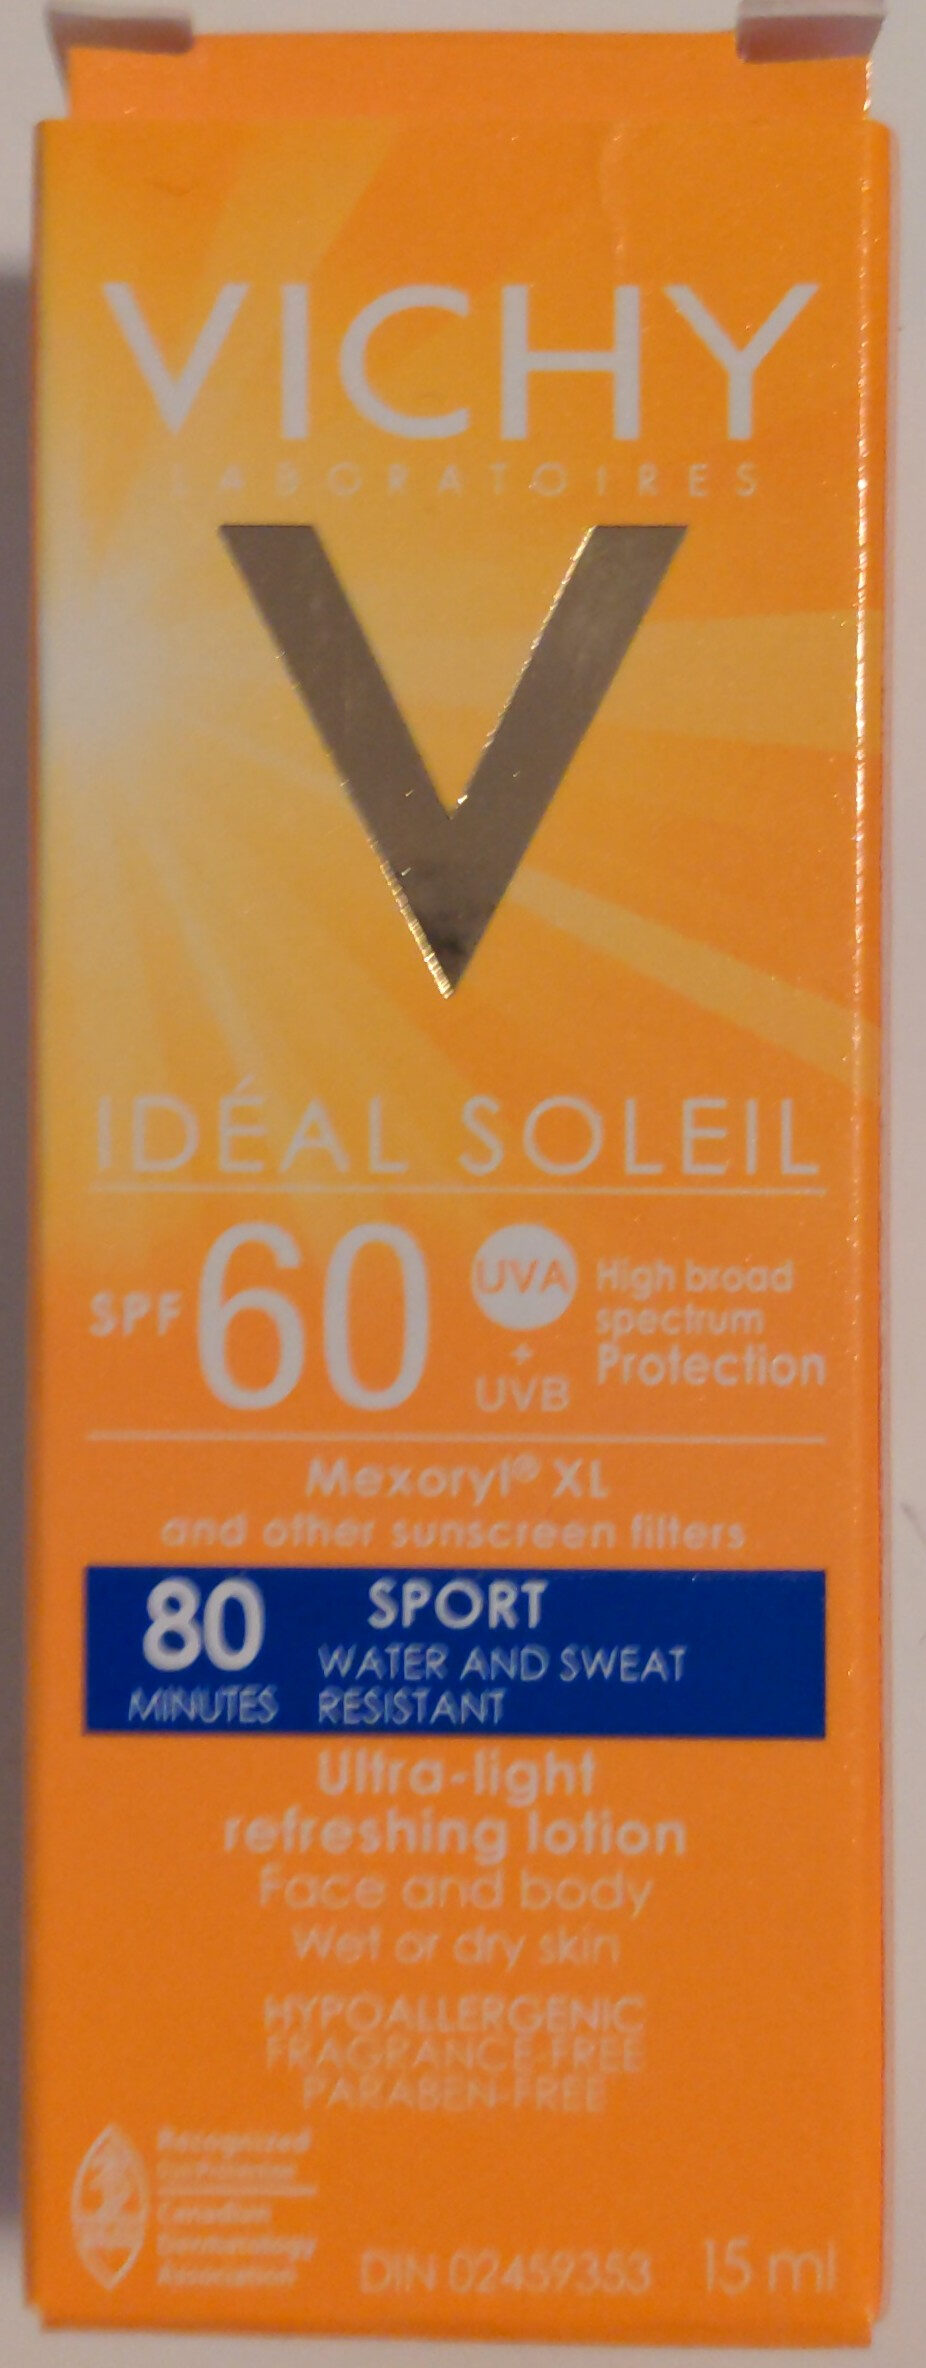 Idéal Soleil SPF 60 - Produto - fr